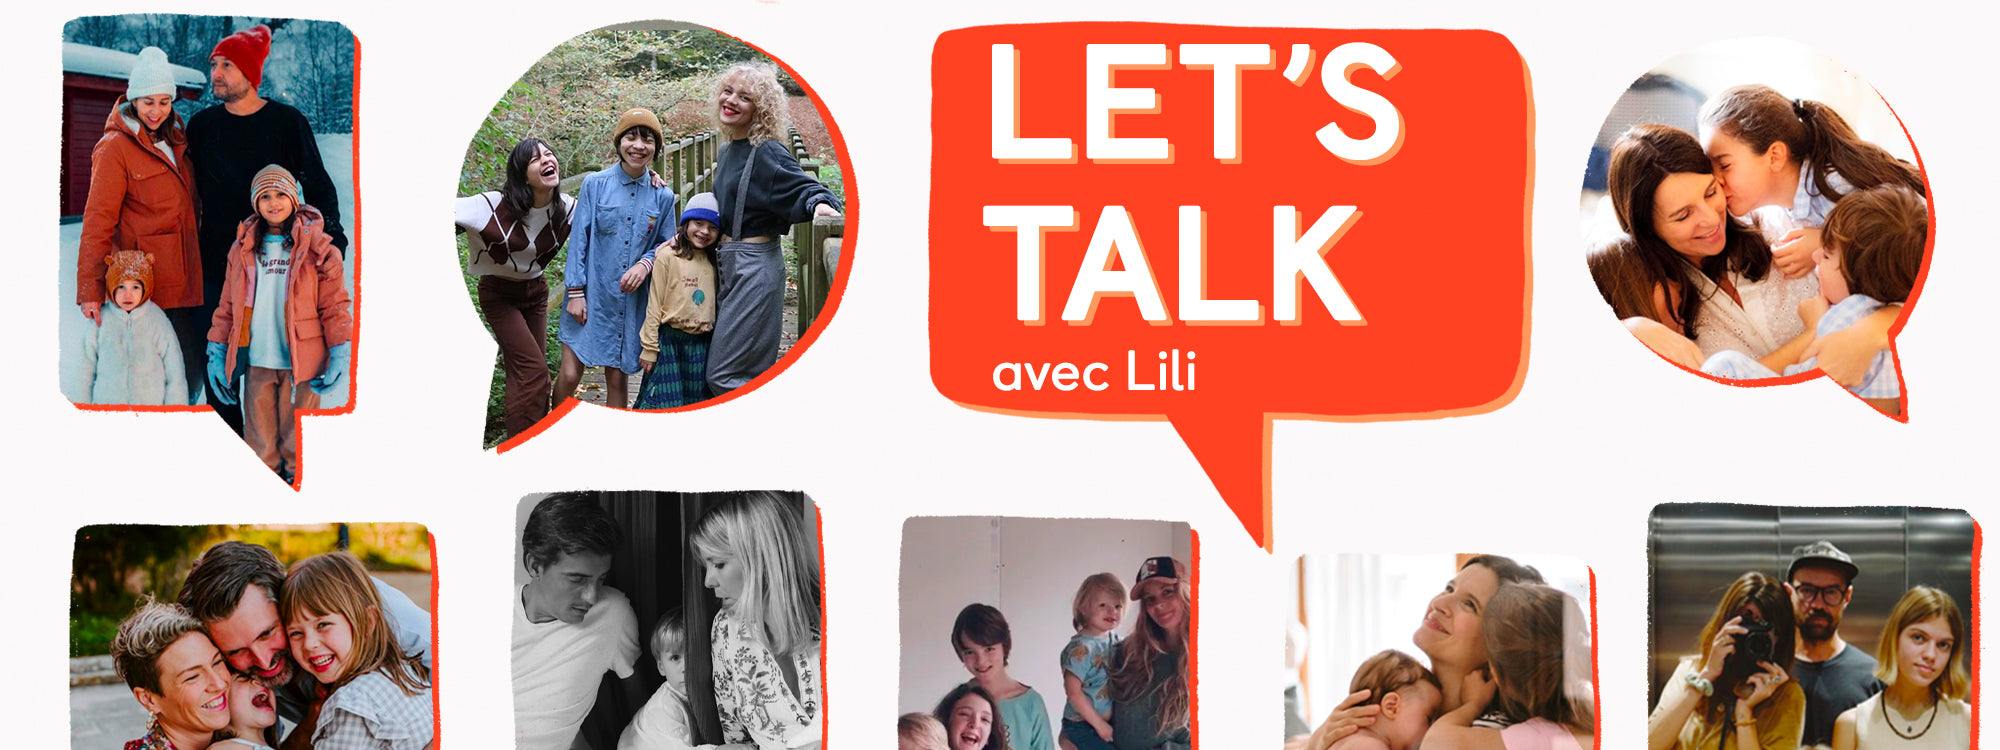 Let's Talk avec Lili